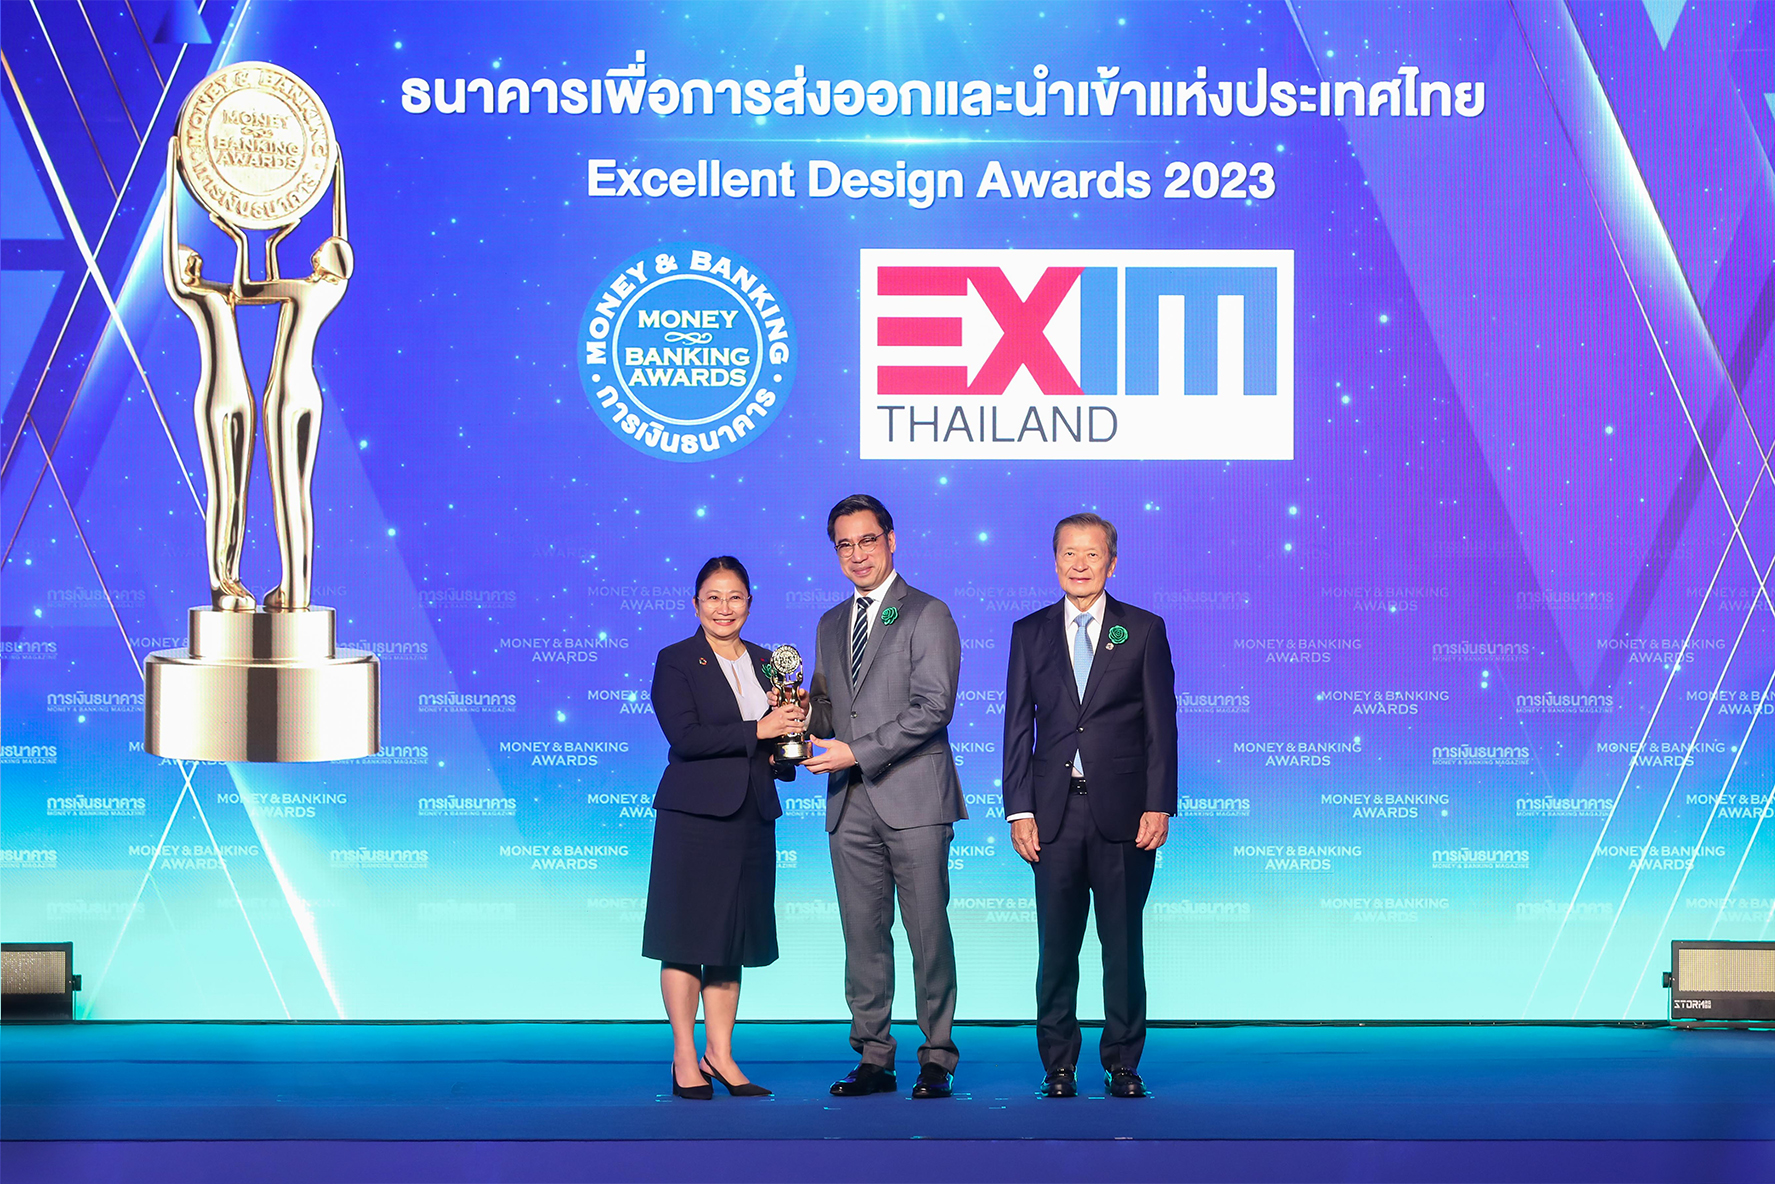 EXIM BANK คว้ารางวัล “บูทสวยงามยอดเยี่ยม” งานมหกรรมการเงินกรุงเทพ ครั้งที่ 23